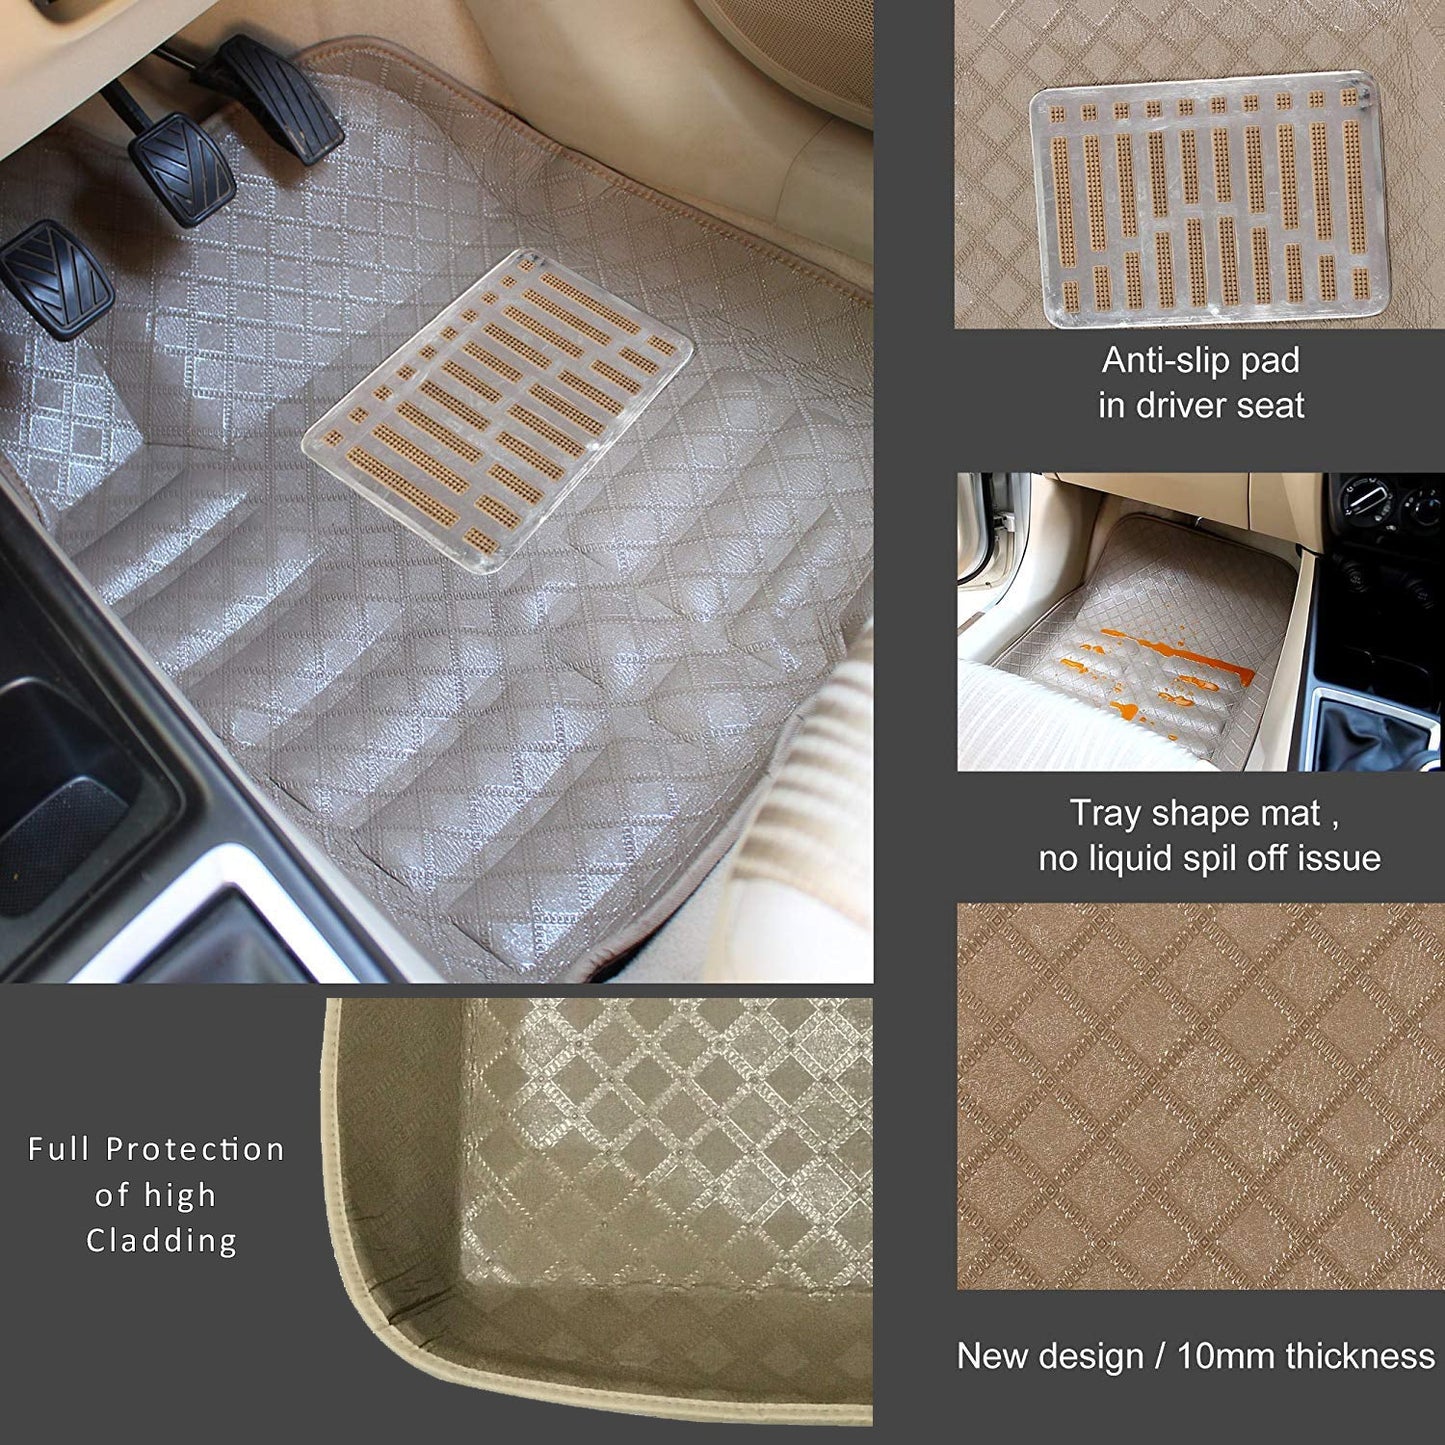 Oshotto 4D Artificial Leather Car Floor Mats For Maruti Suzuki Alto 800 - Set of 3 (2 pcs Front & one Long Single Rear pc) - Beige